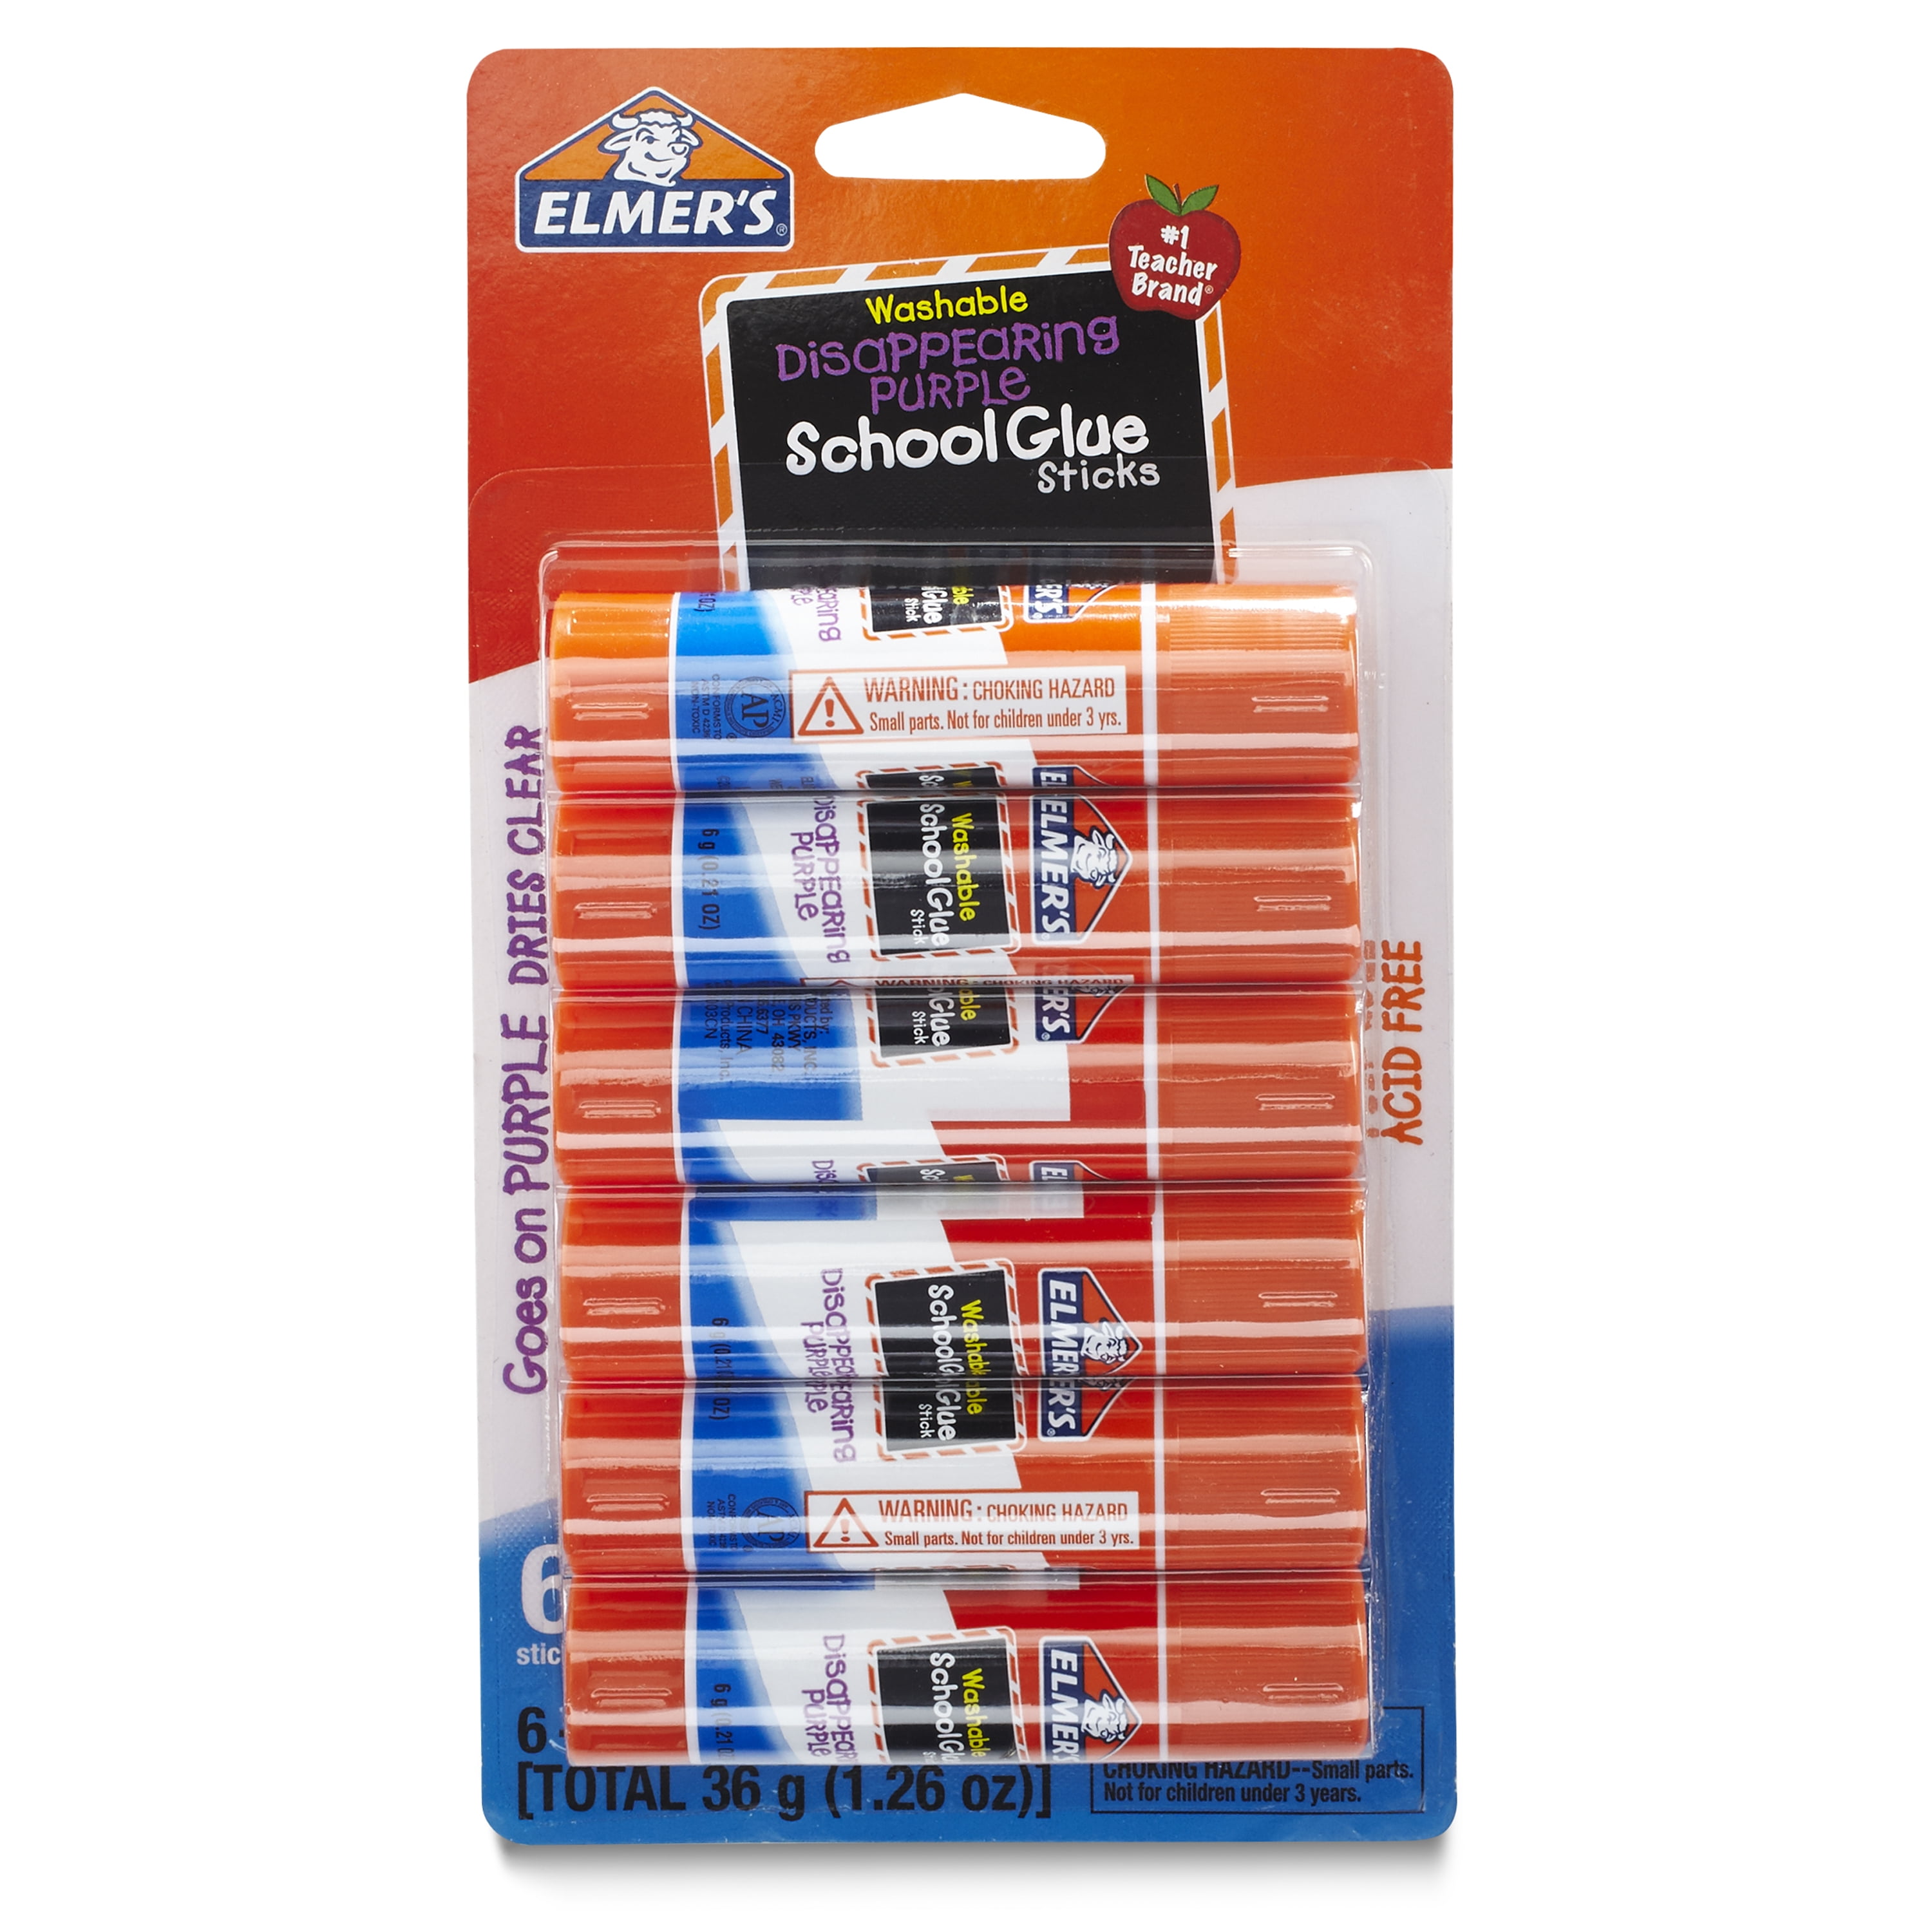 Elmer's Washable Clear Glue Stick SSH (1/unit), #5561E (E-60